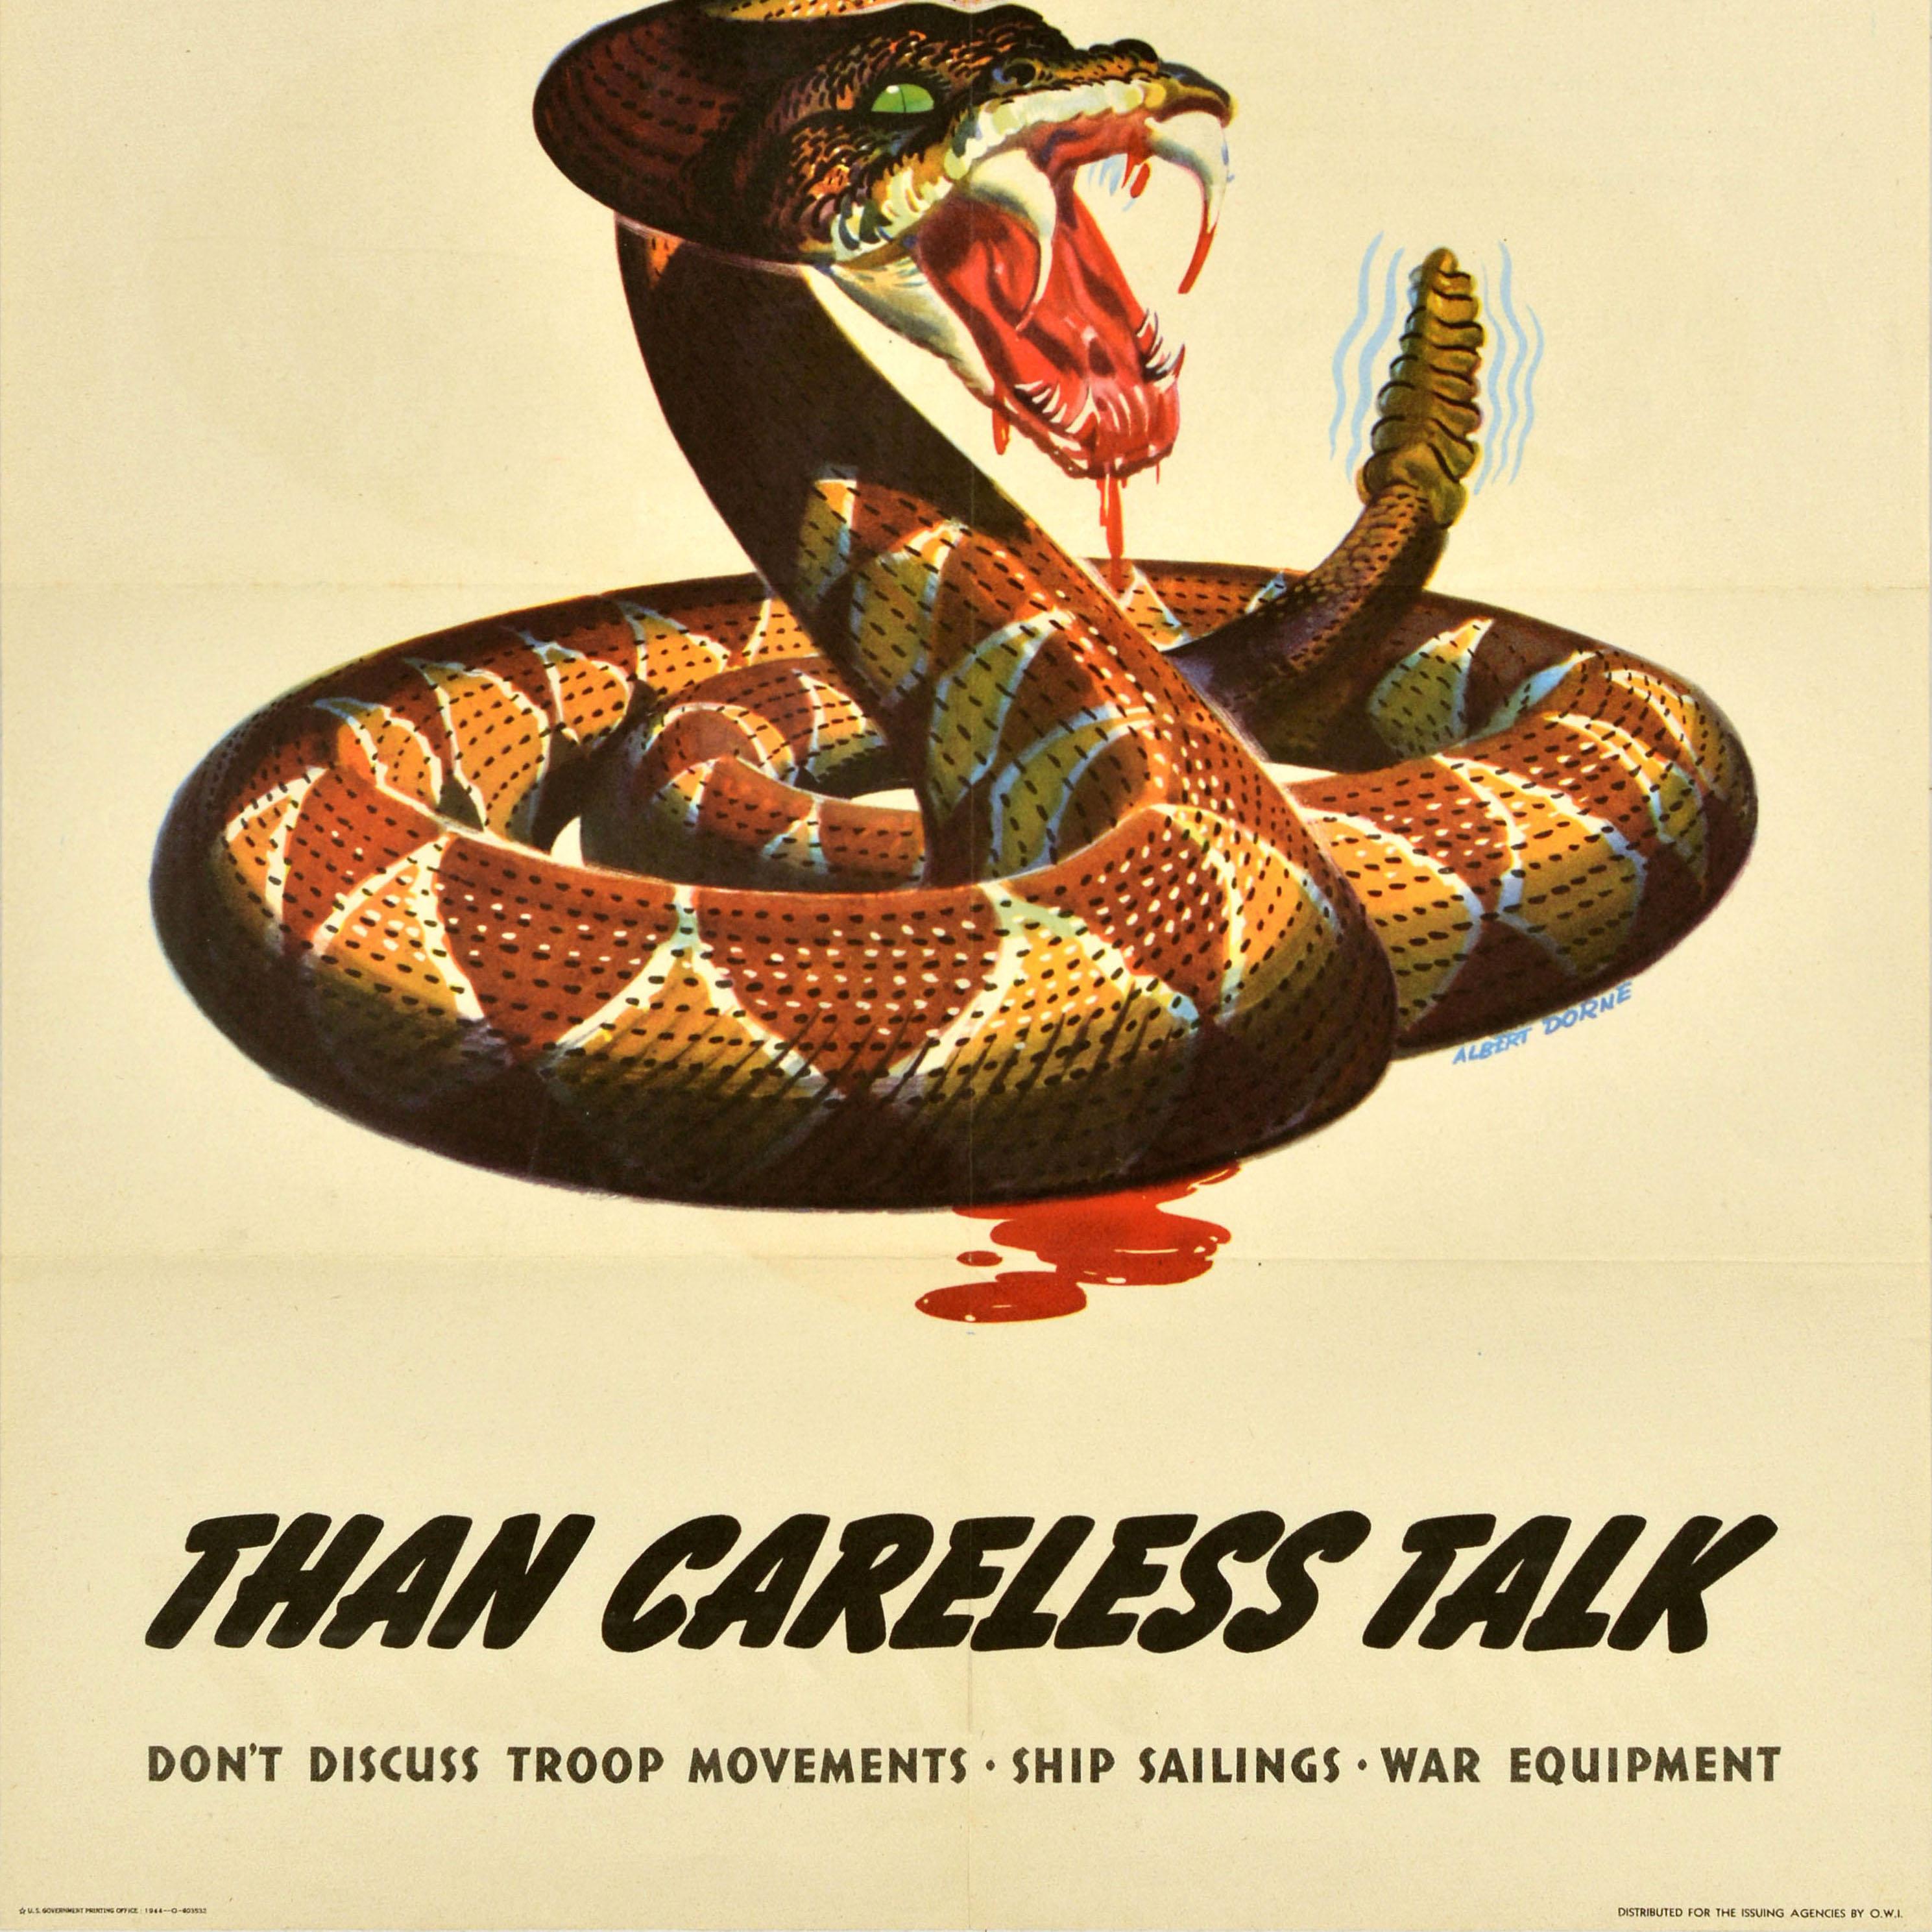 Original Vintage Krieg Propaganda-Poster, Careless Talk Snake, WWII, Albert Dorne, Vintage (Orange), Print, von Albert L. Dorne